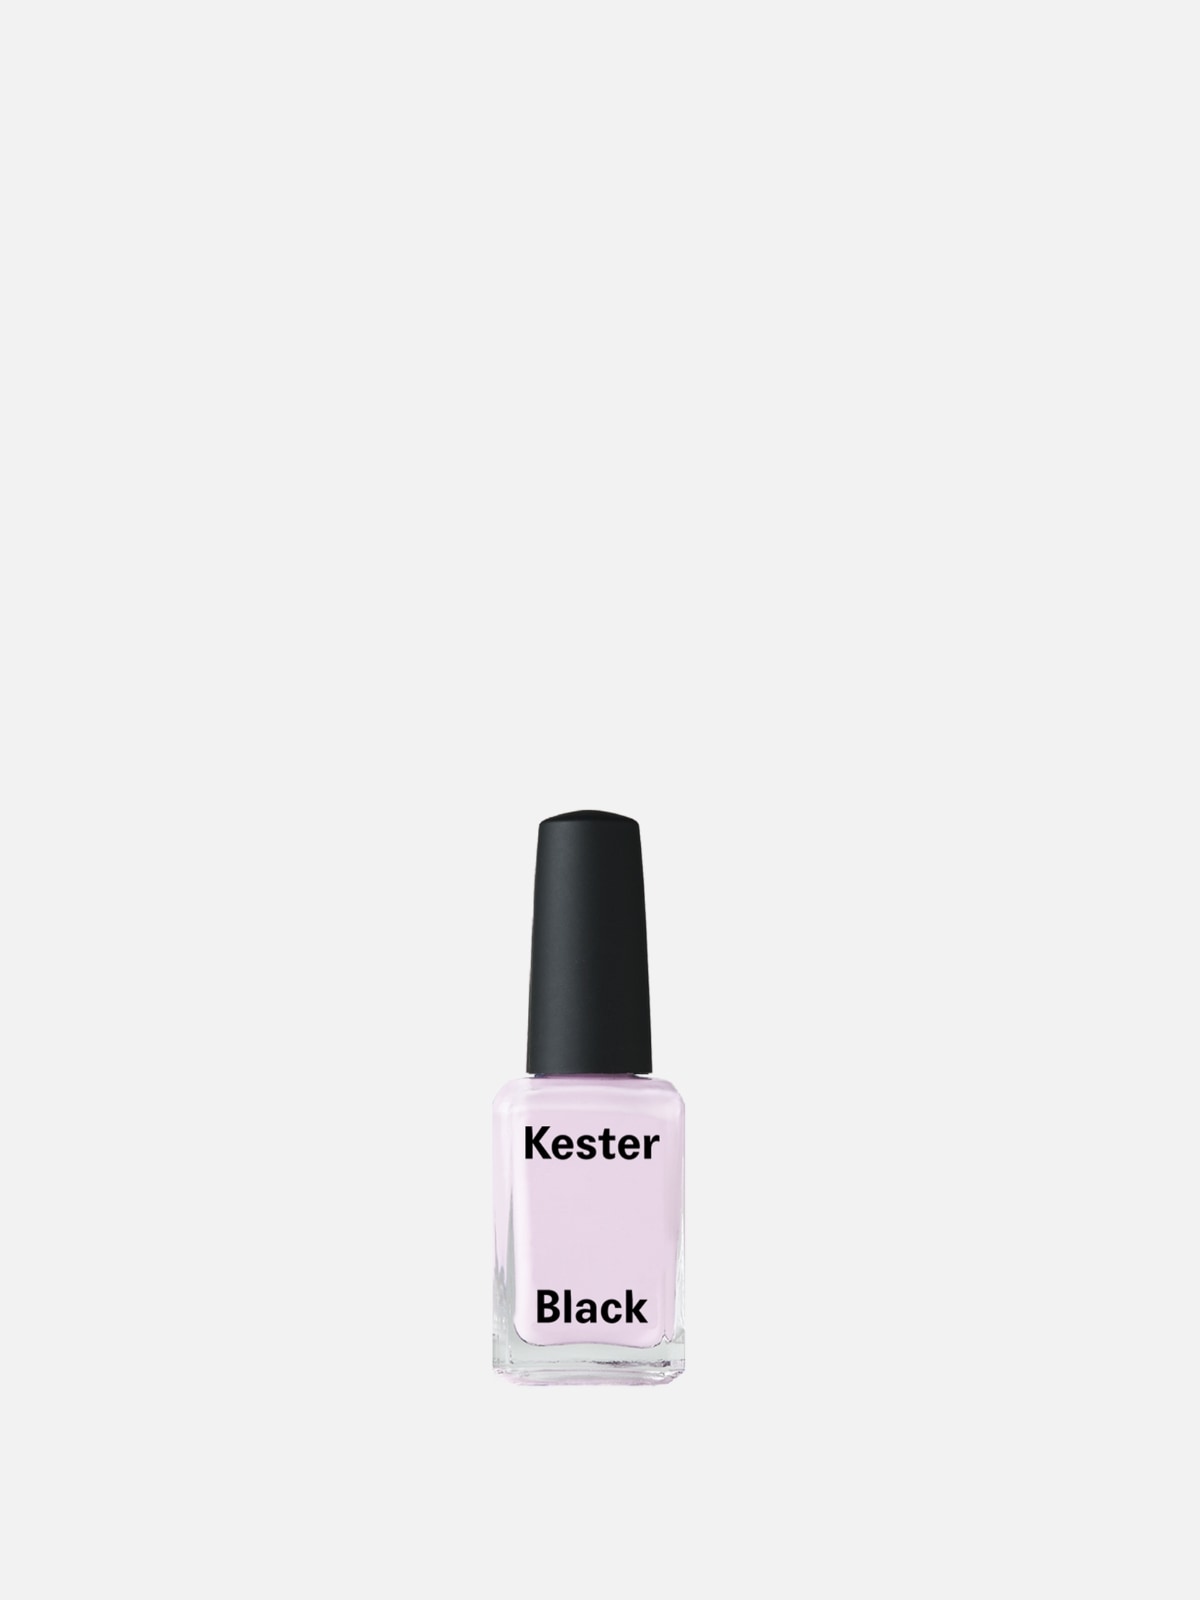 Kester Black - Fairy Floss - Smalto color rosa pallido